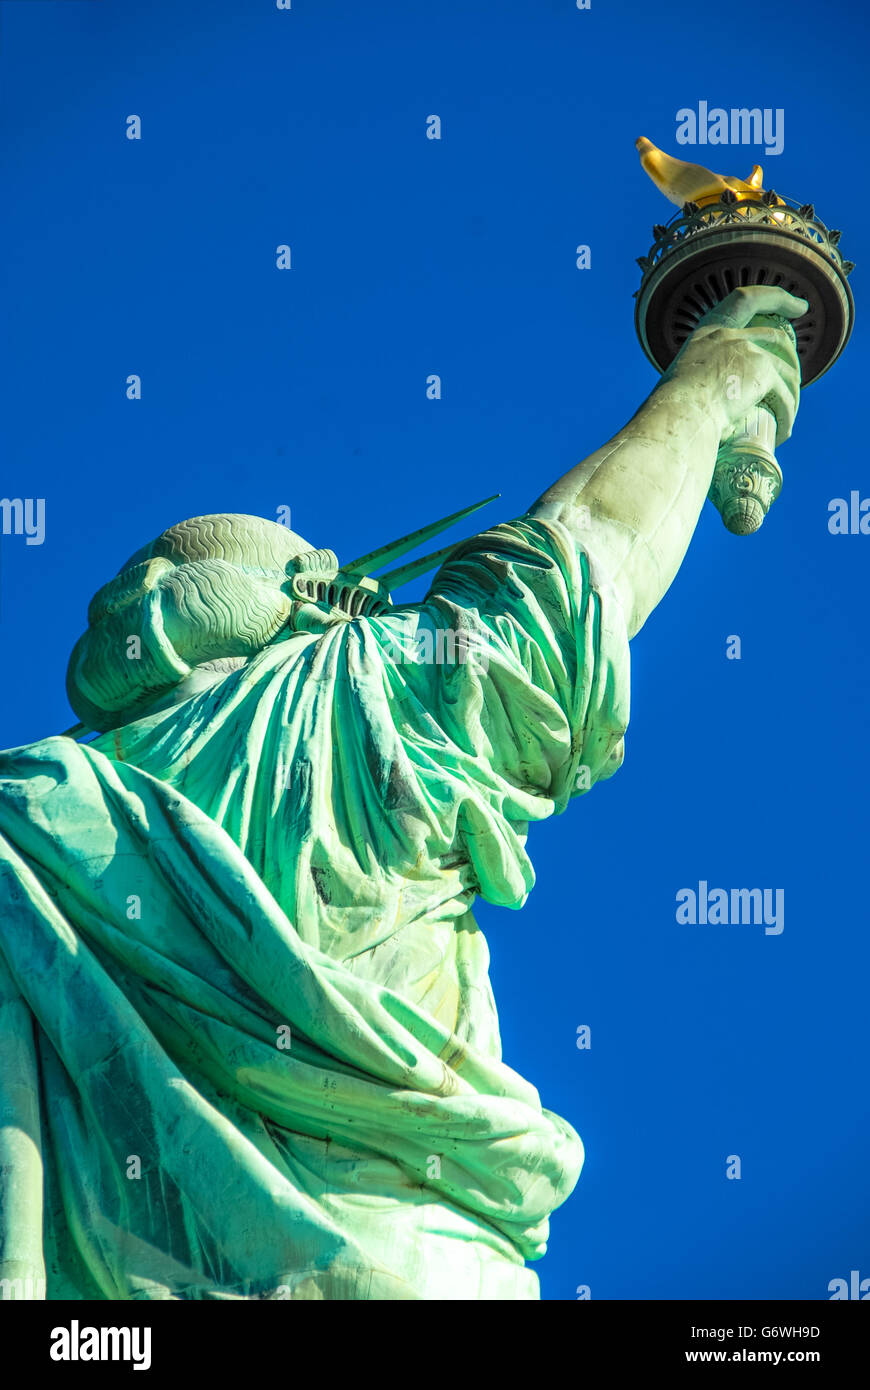 Detalle de la estatua de la Libertad en Nueva York, EE.UU. Foto de stock